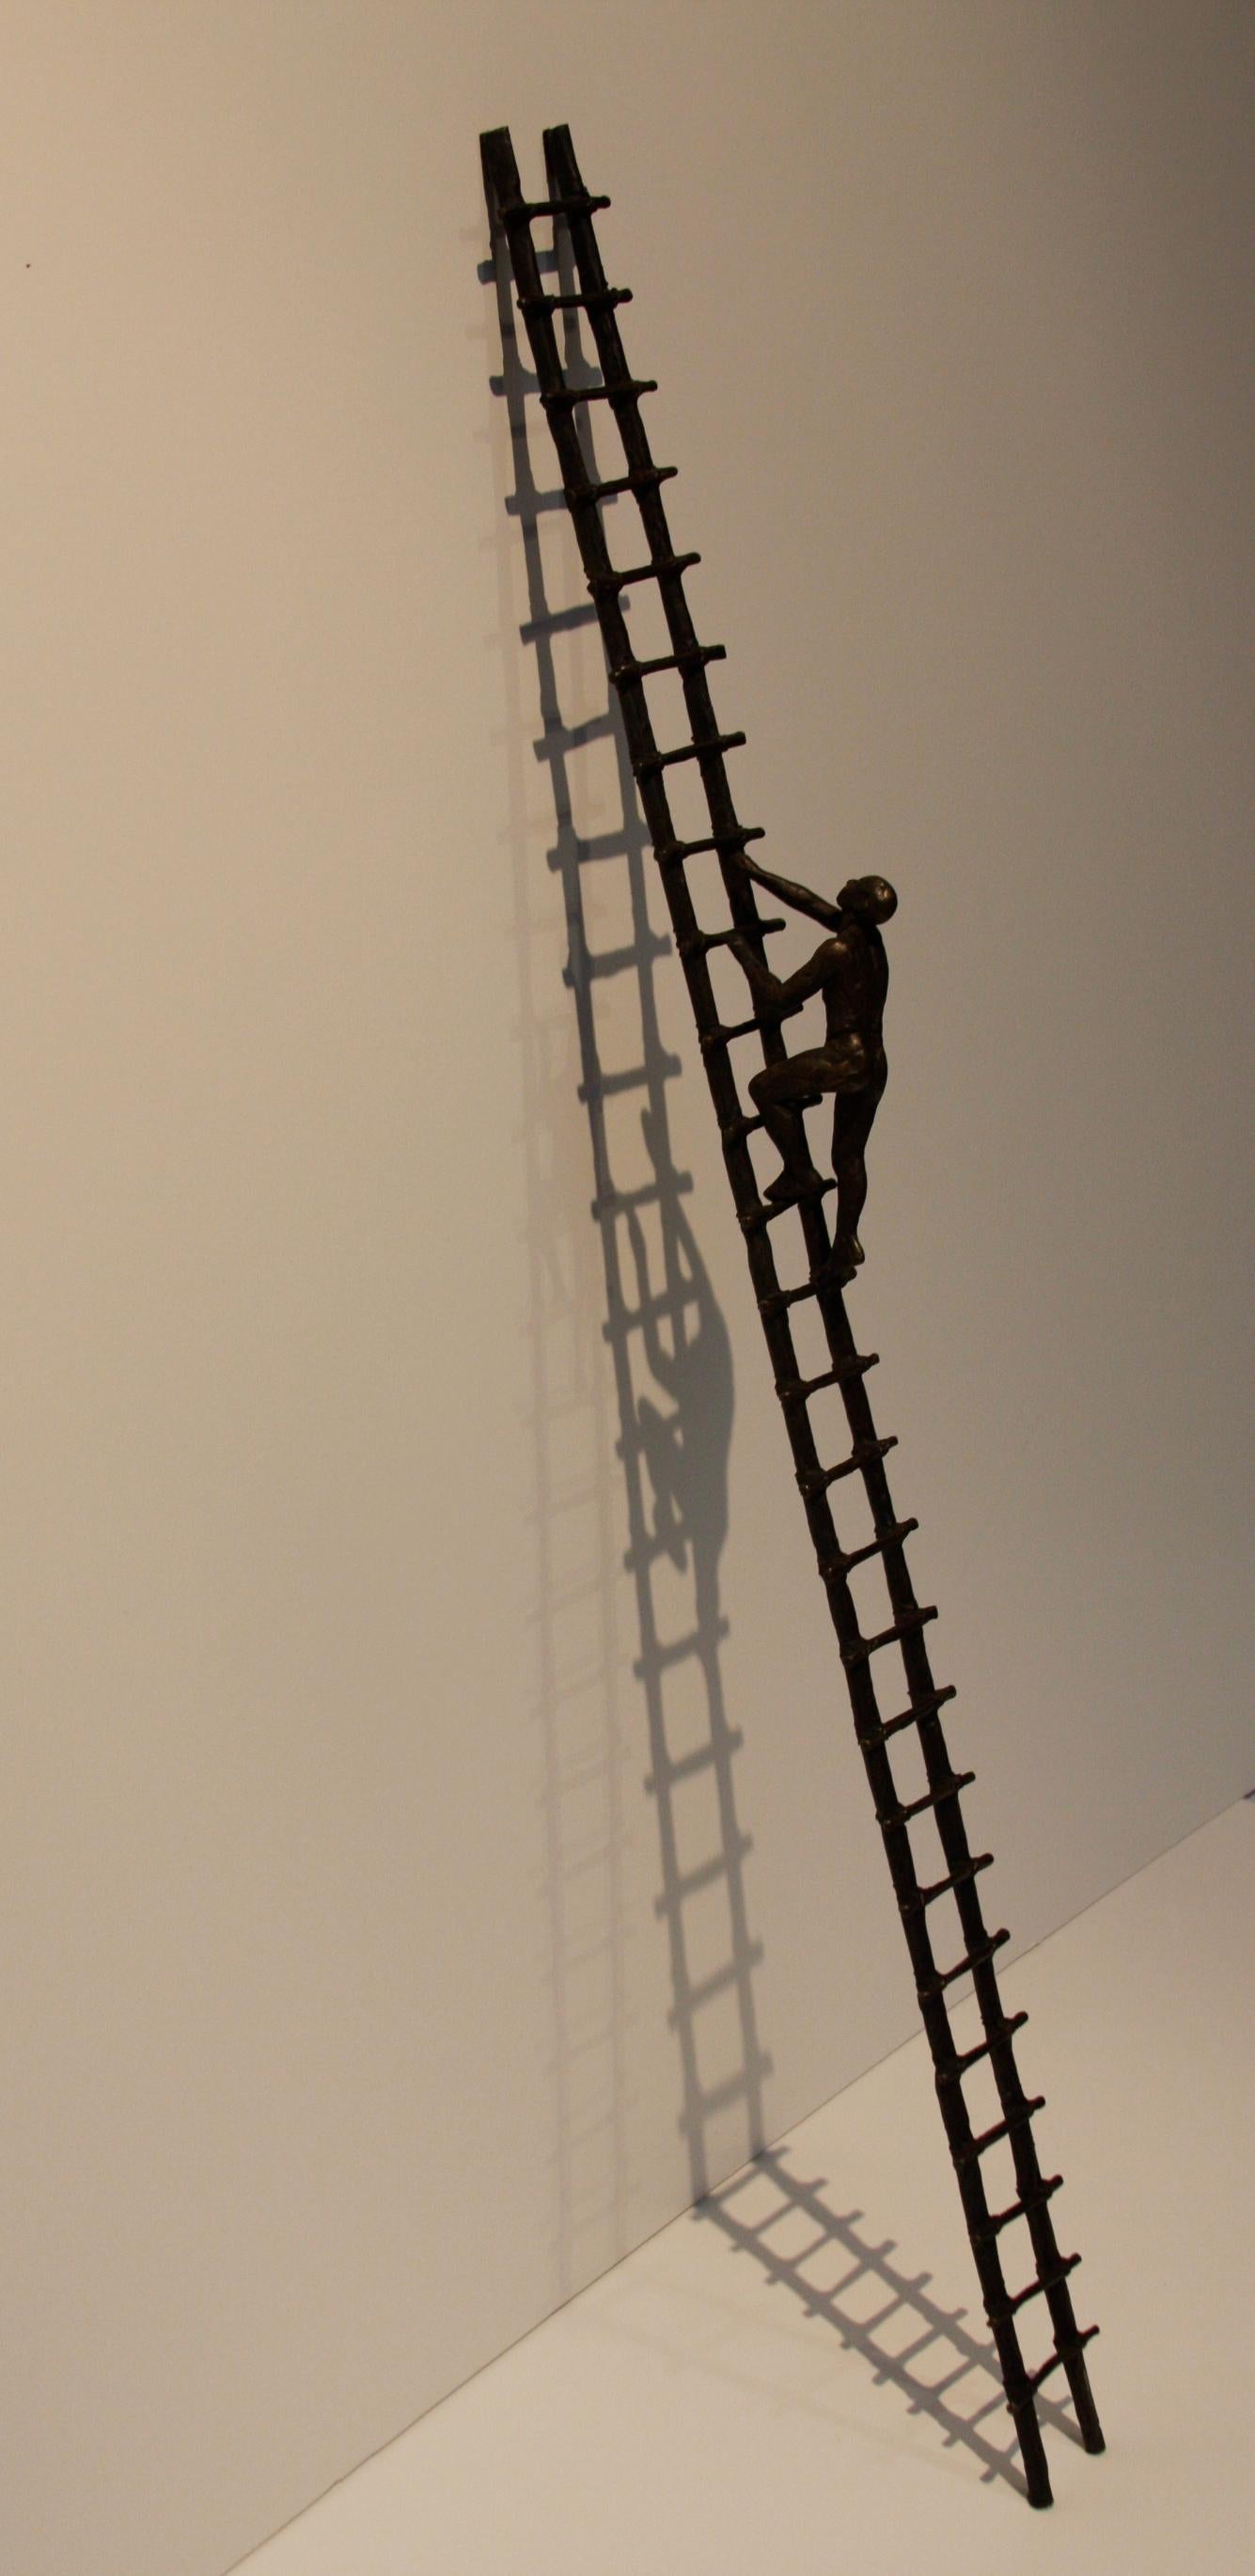 Bill Starke Figurative Sculpture - Solitary Climber